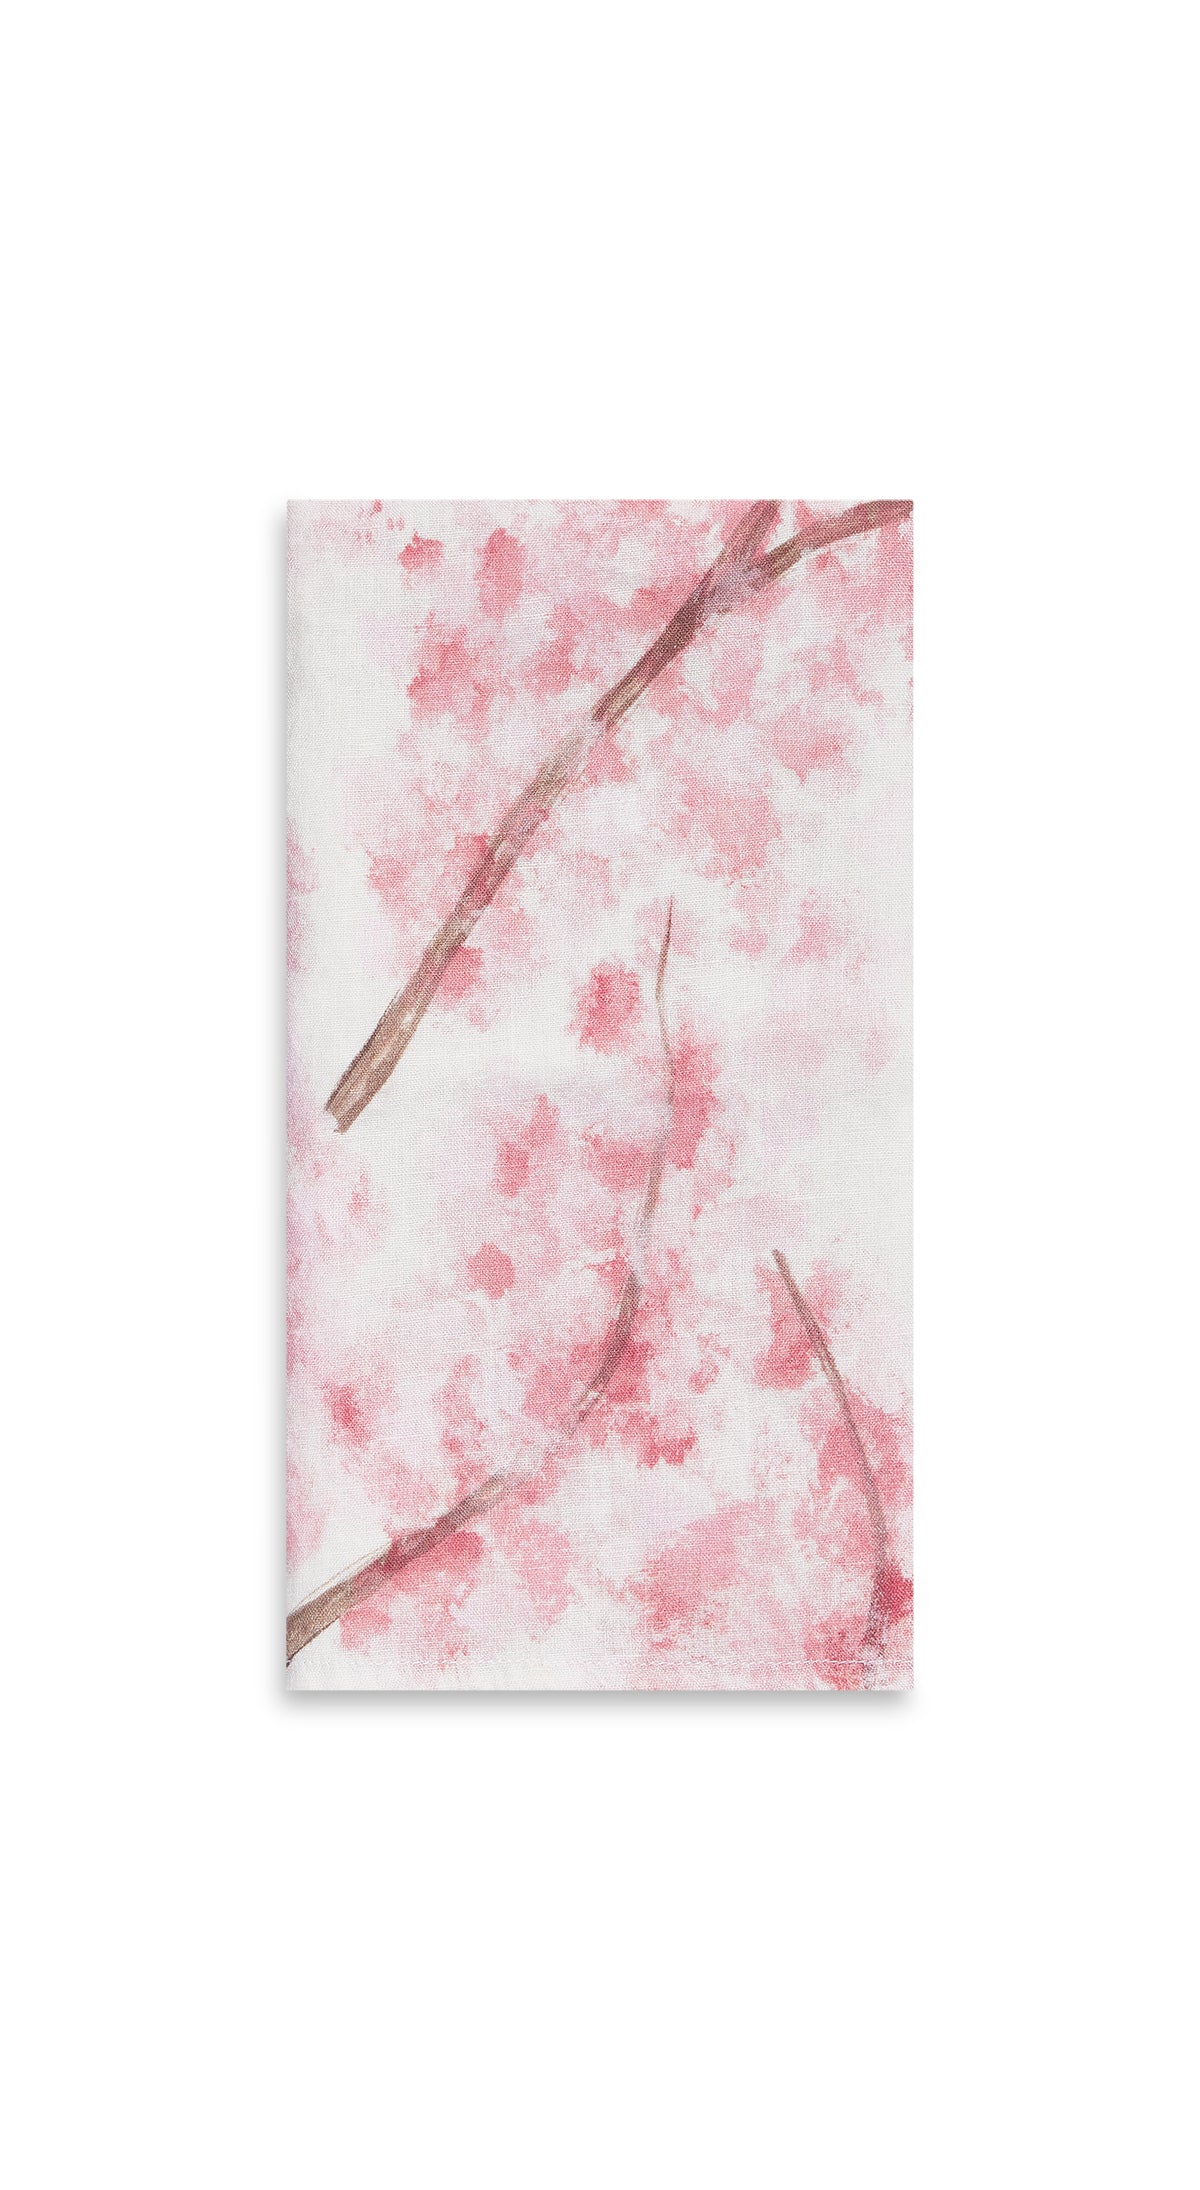 Blossom Linen Napkin in White & Pink, 50x50cm